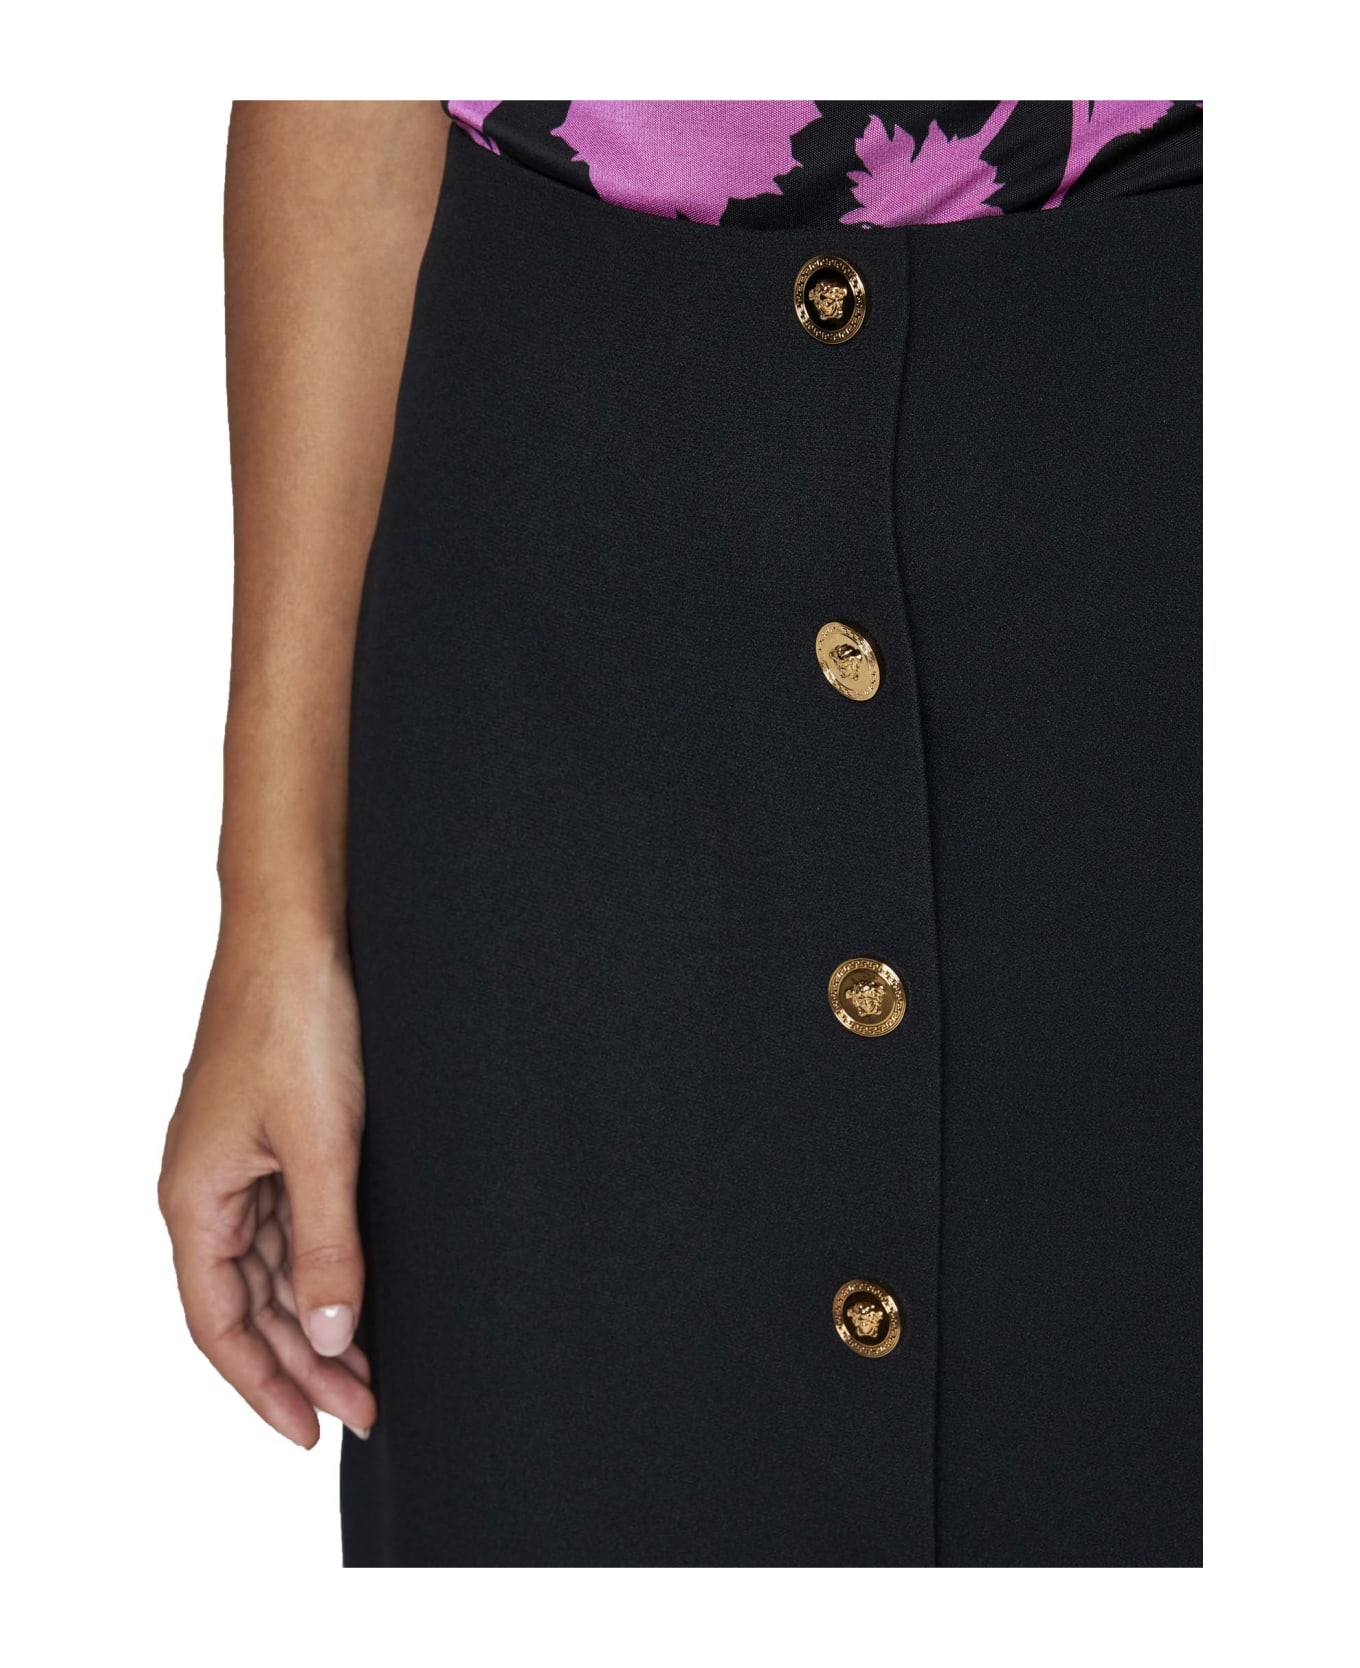 Versace Satin Mini Skirt - Black